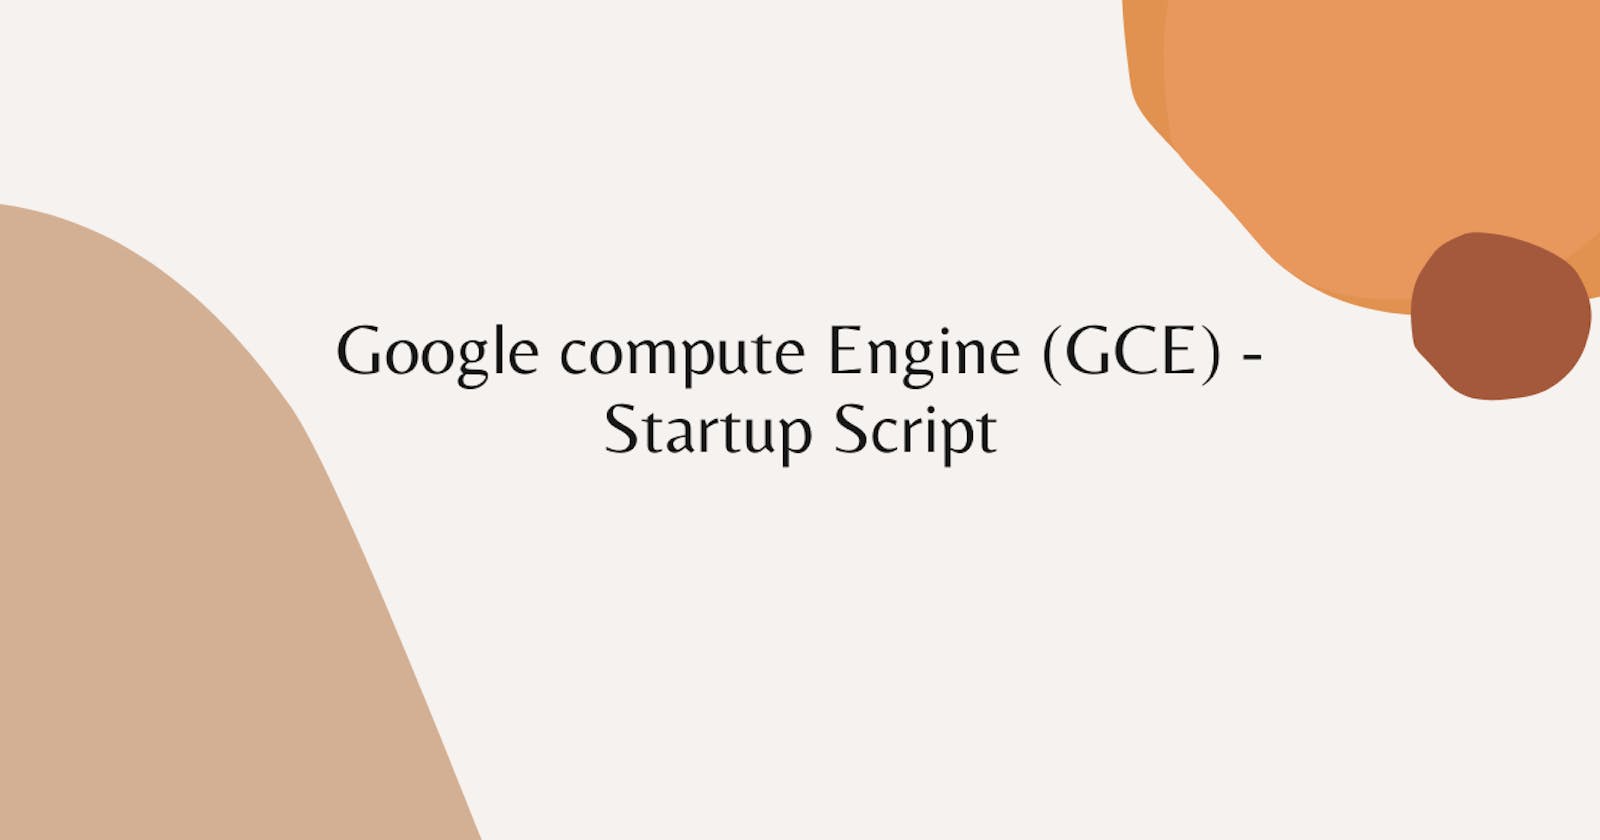 Google compute Engine (GCE) - Startup Script